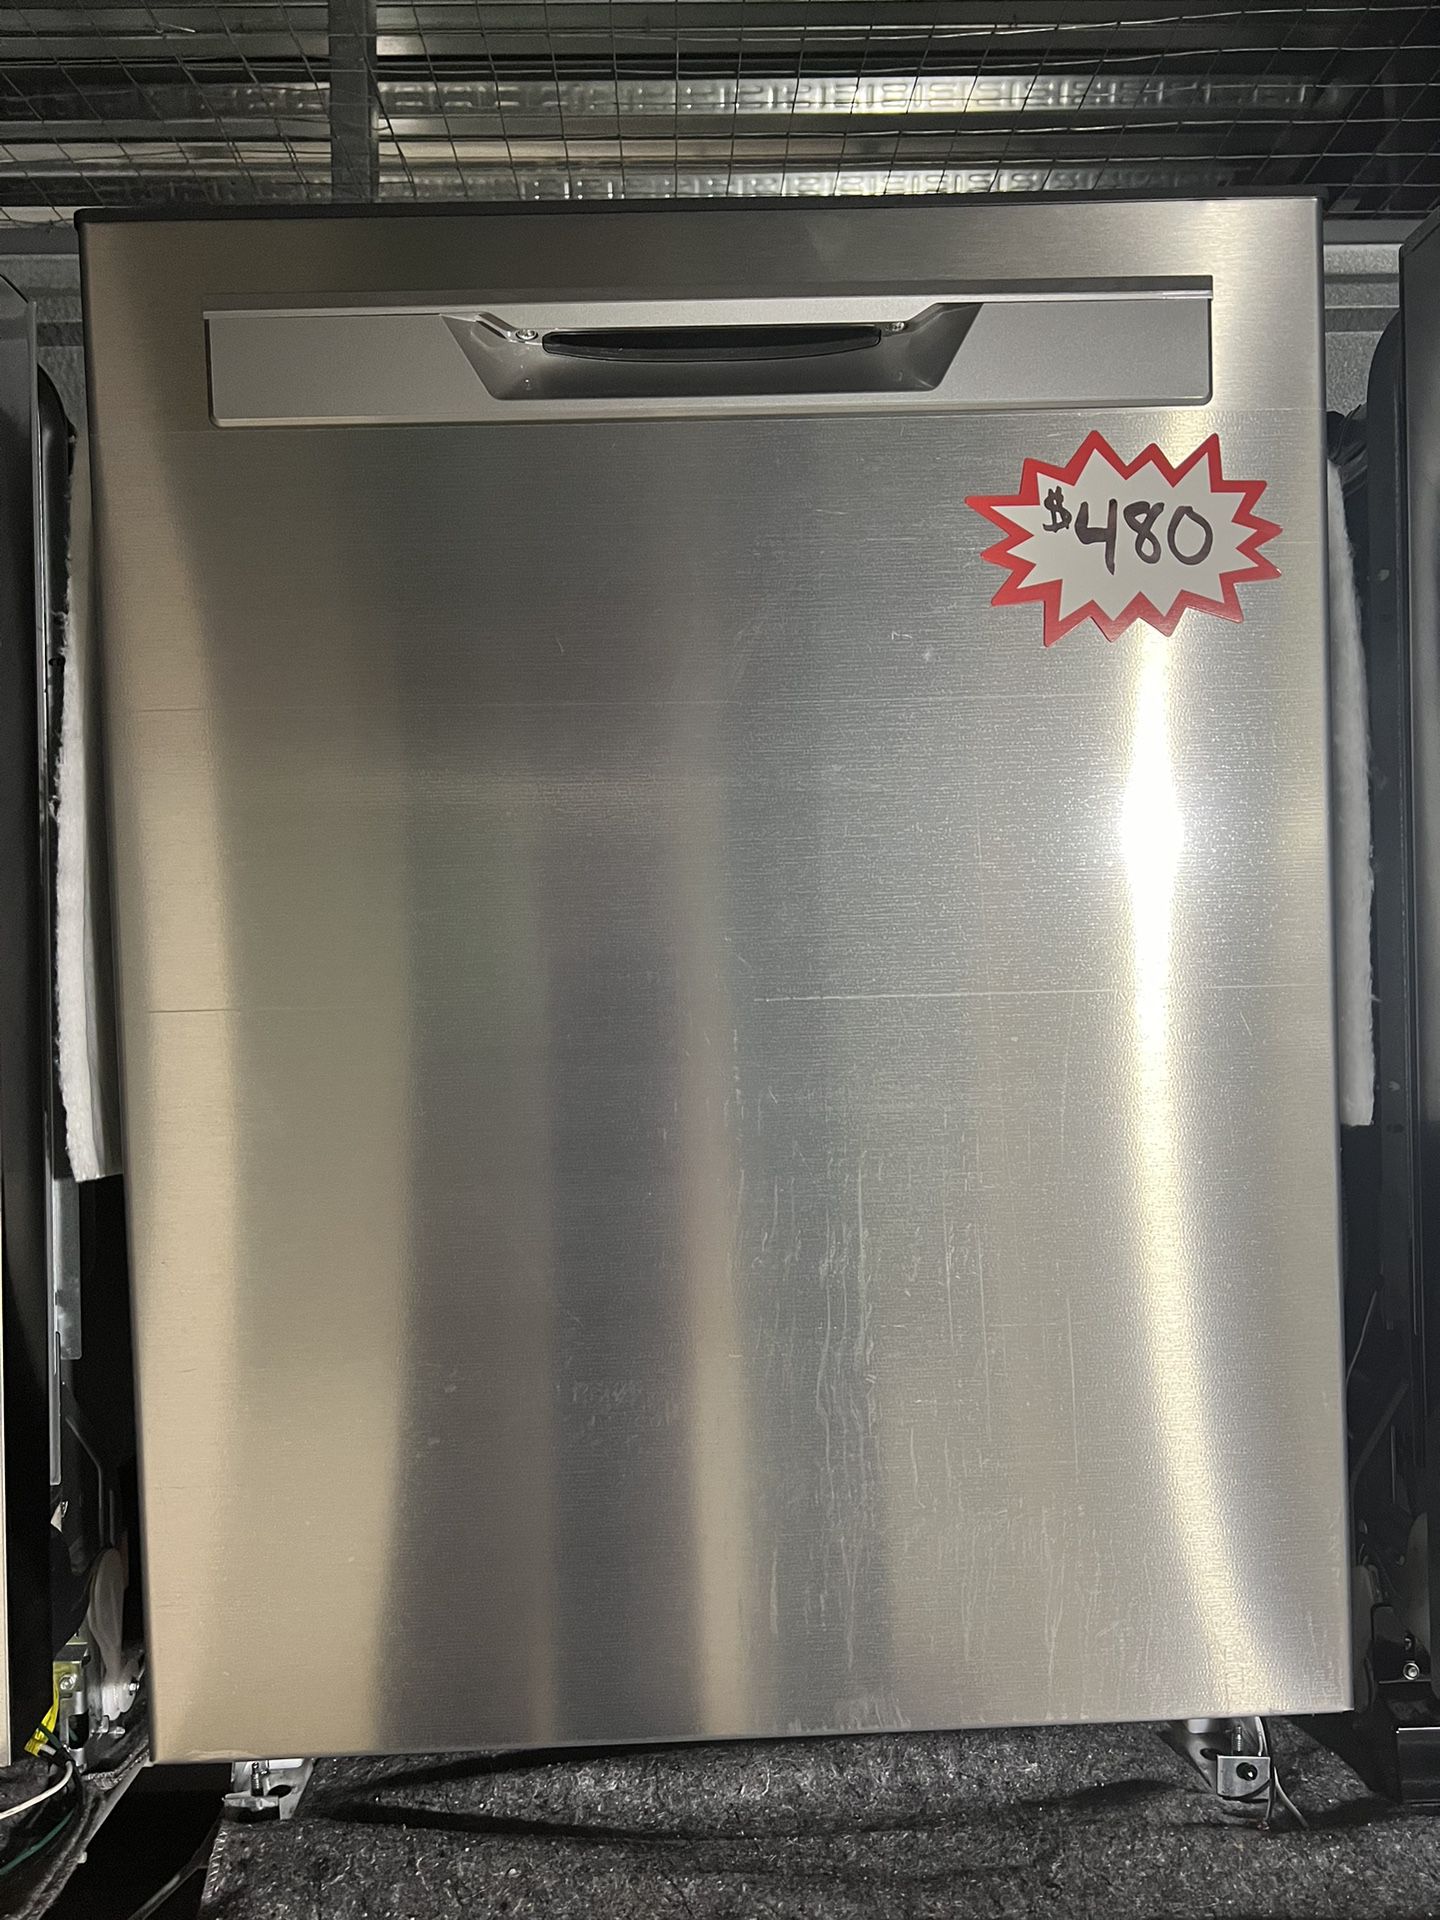 Frigidaire Gallery 24” Built-in Dishwasher (FRSS) 52-dBA